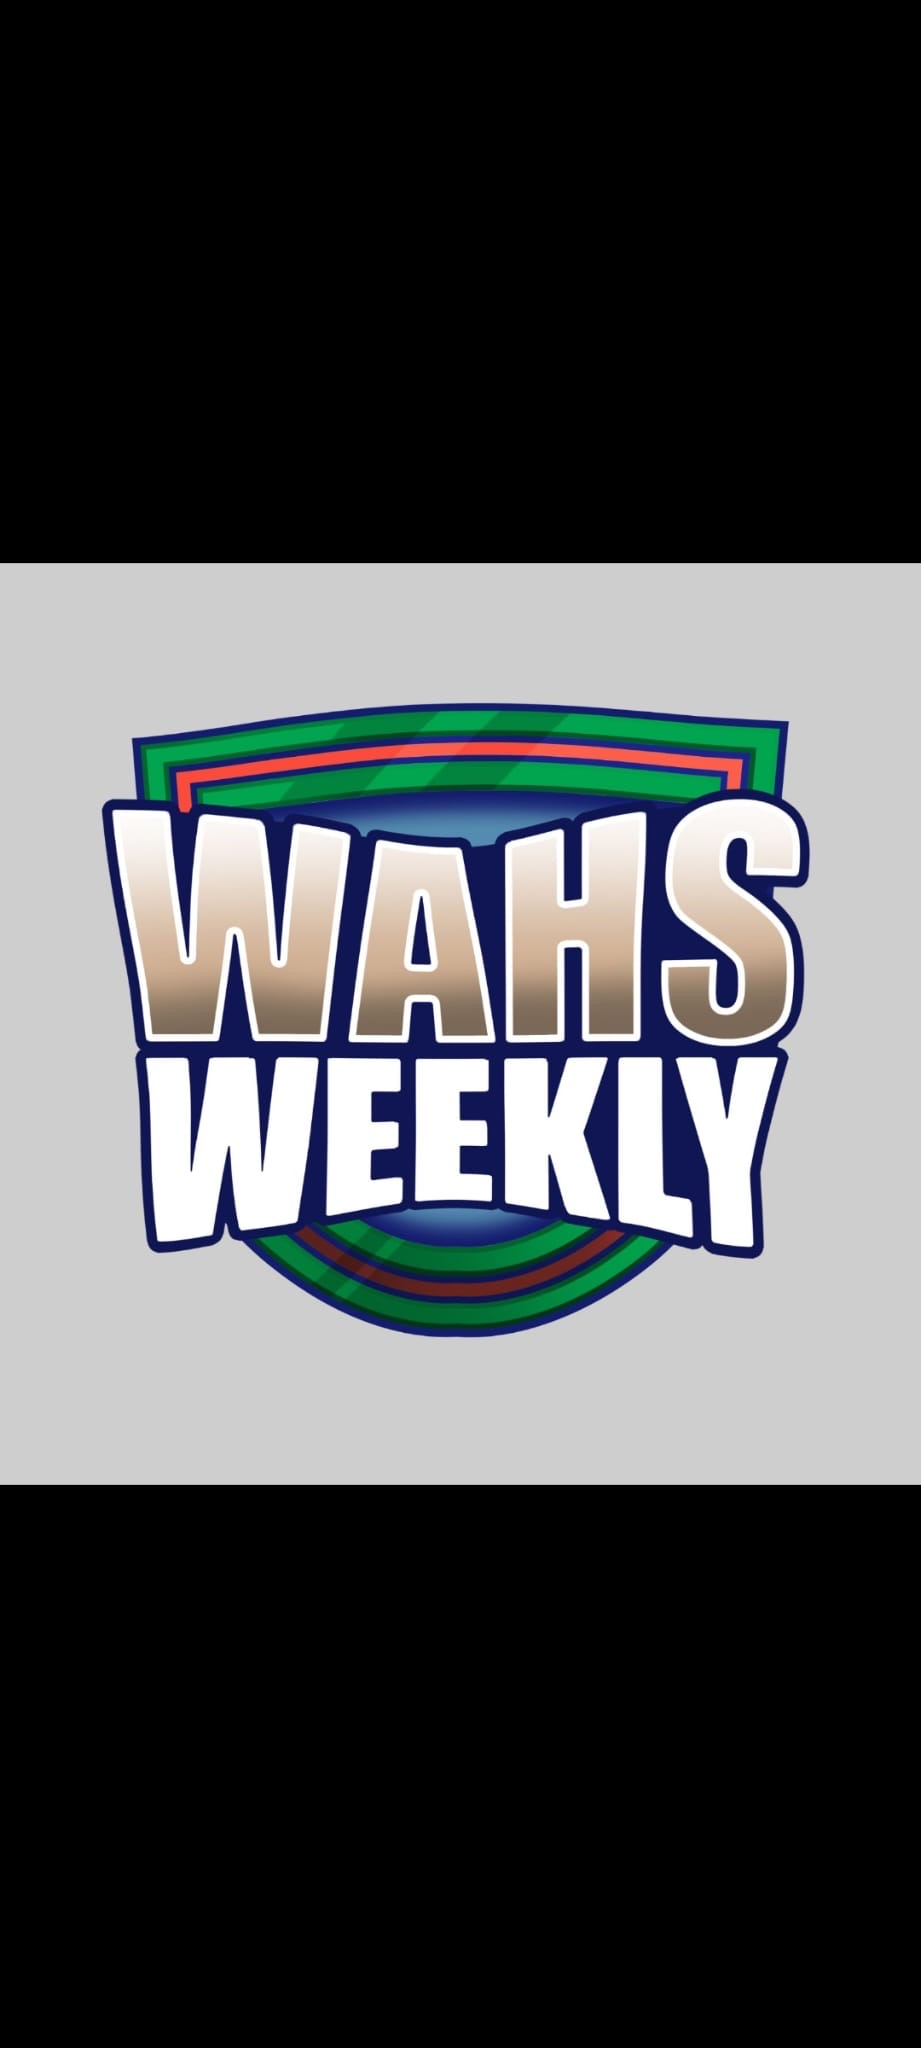 Wahs Weekly - Episode 7 (Talking League)